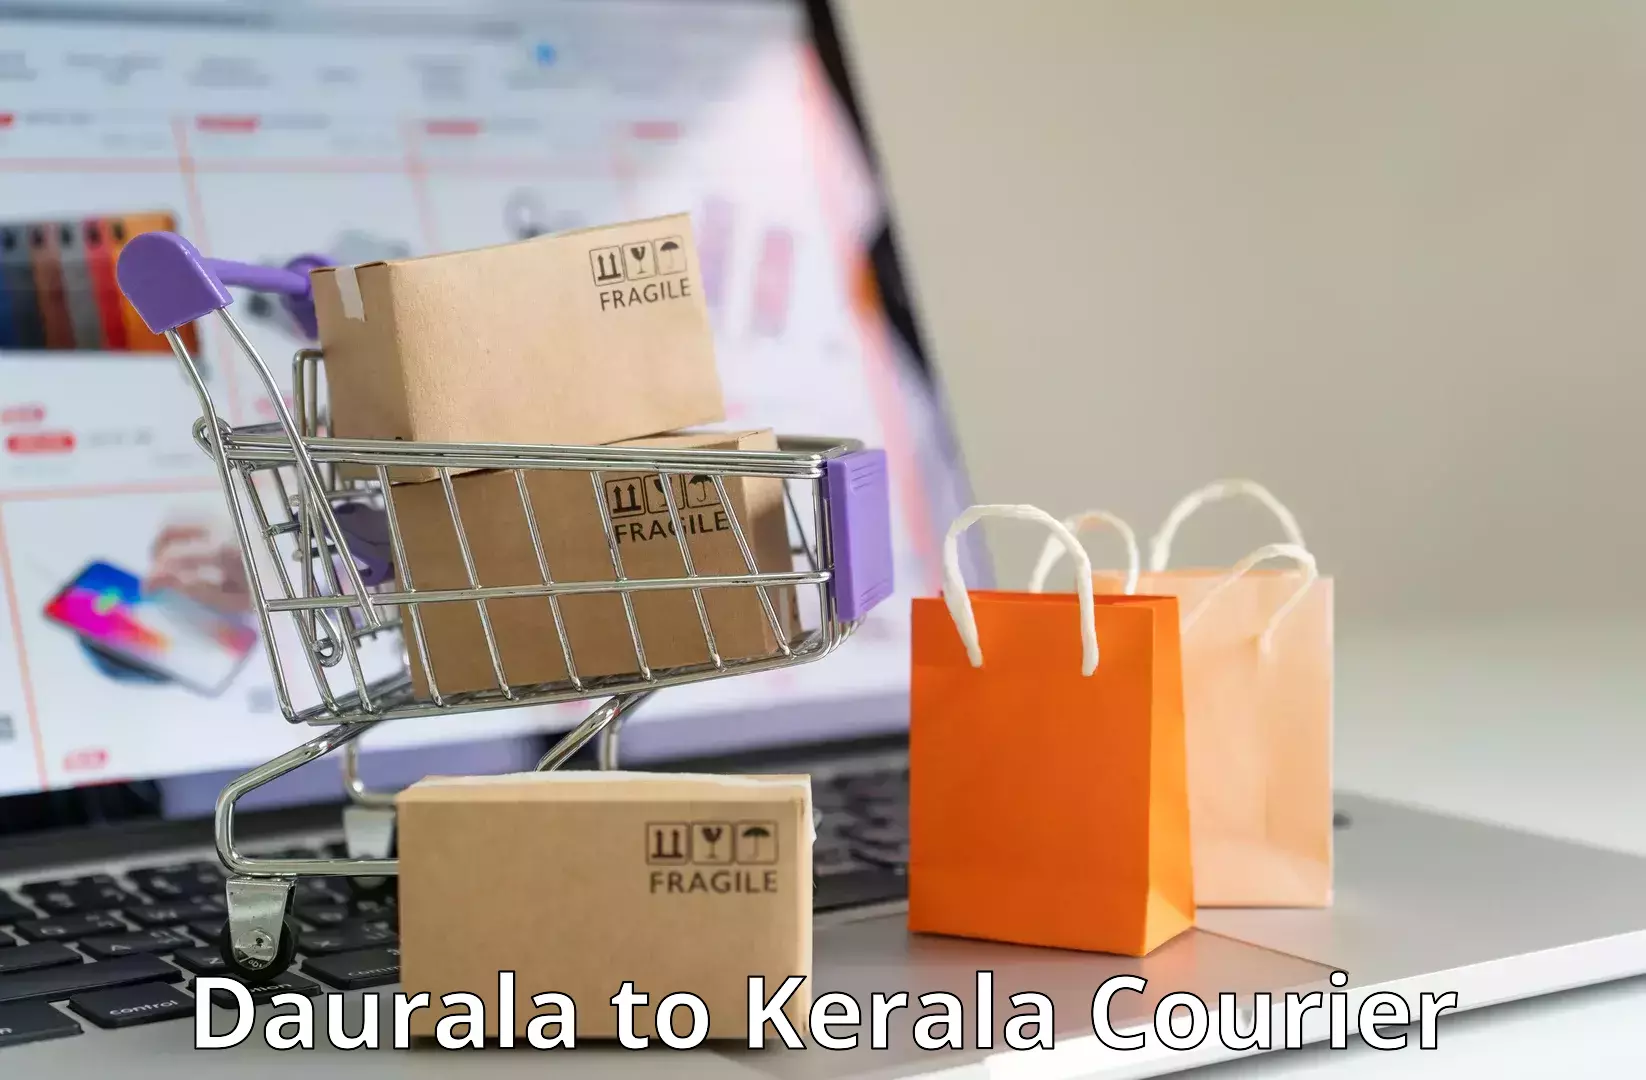 Global delivery options Daurala to Kerala